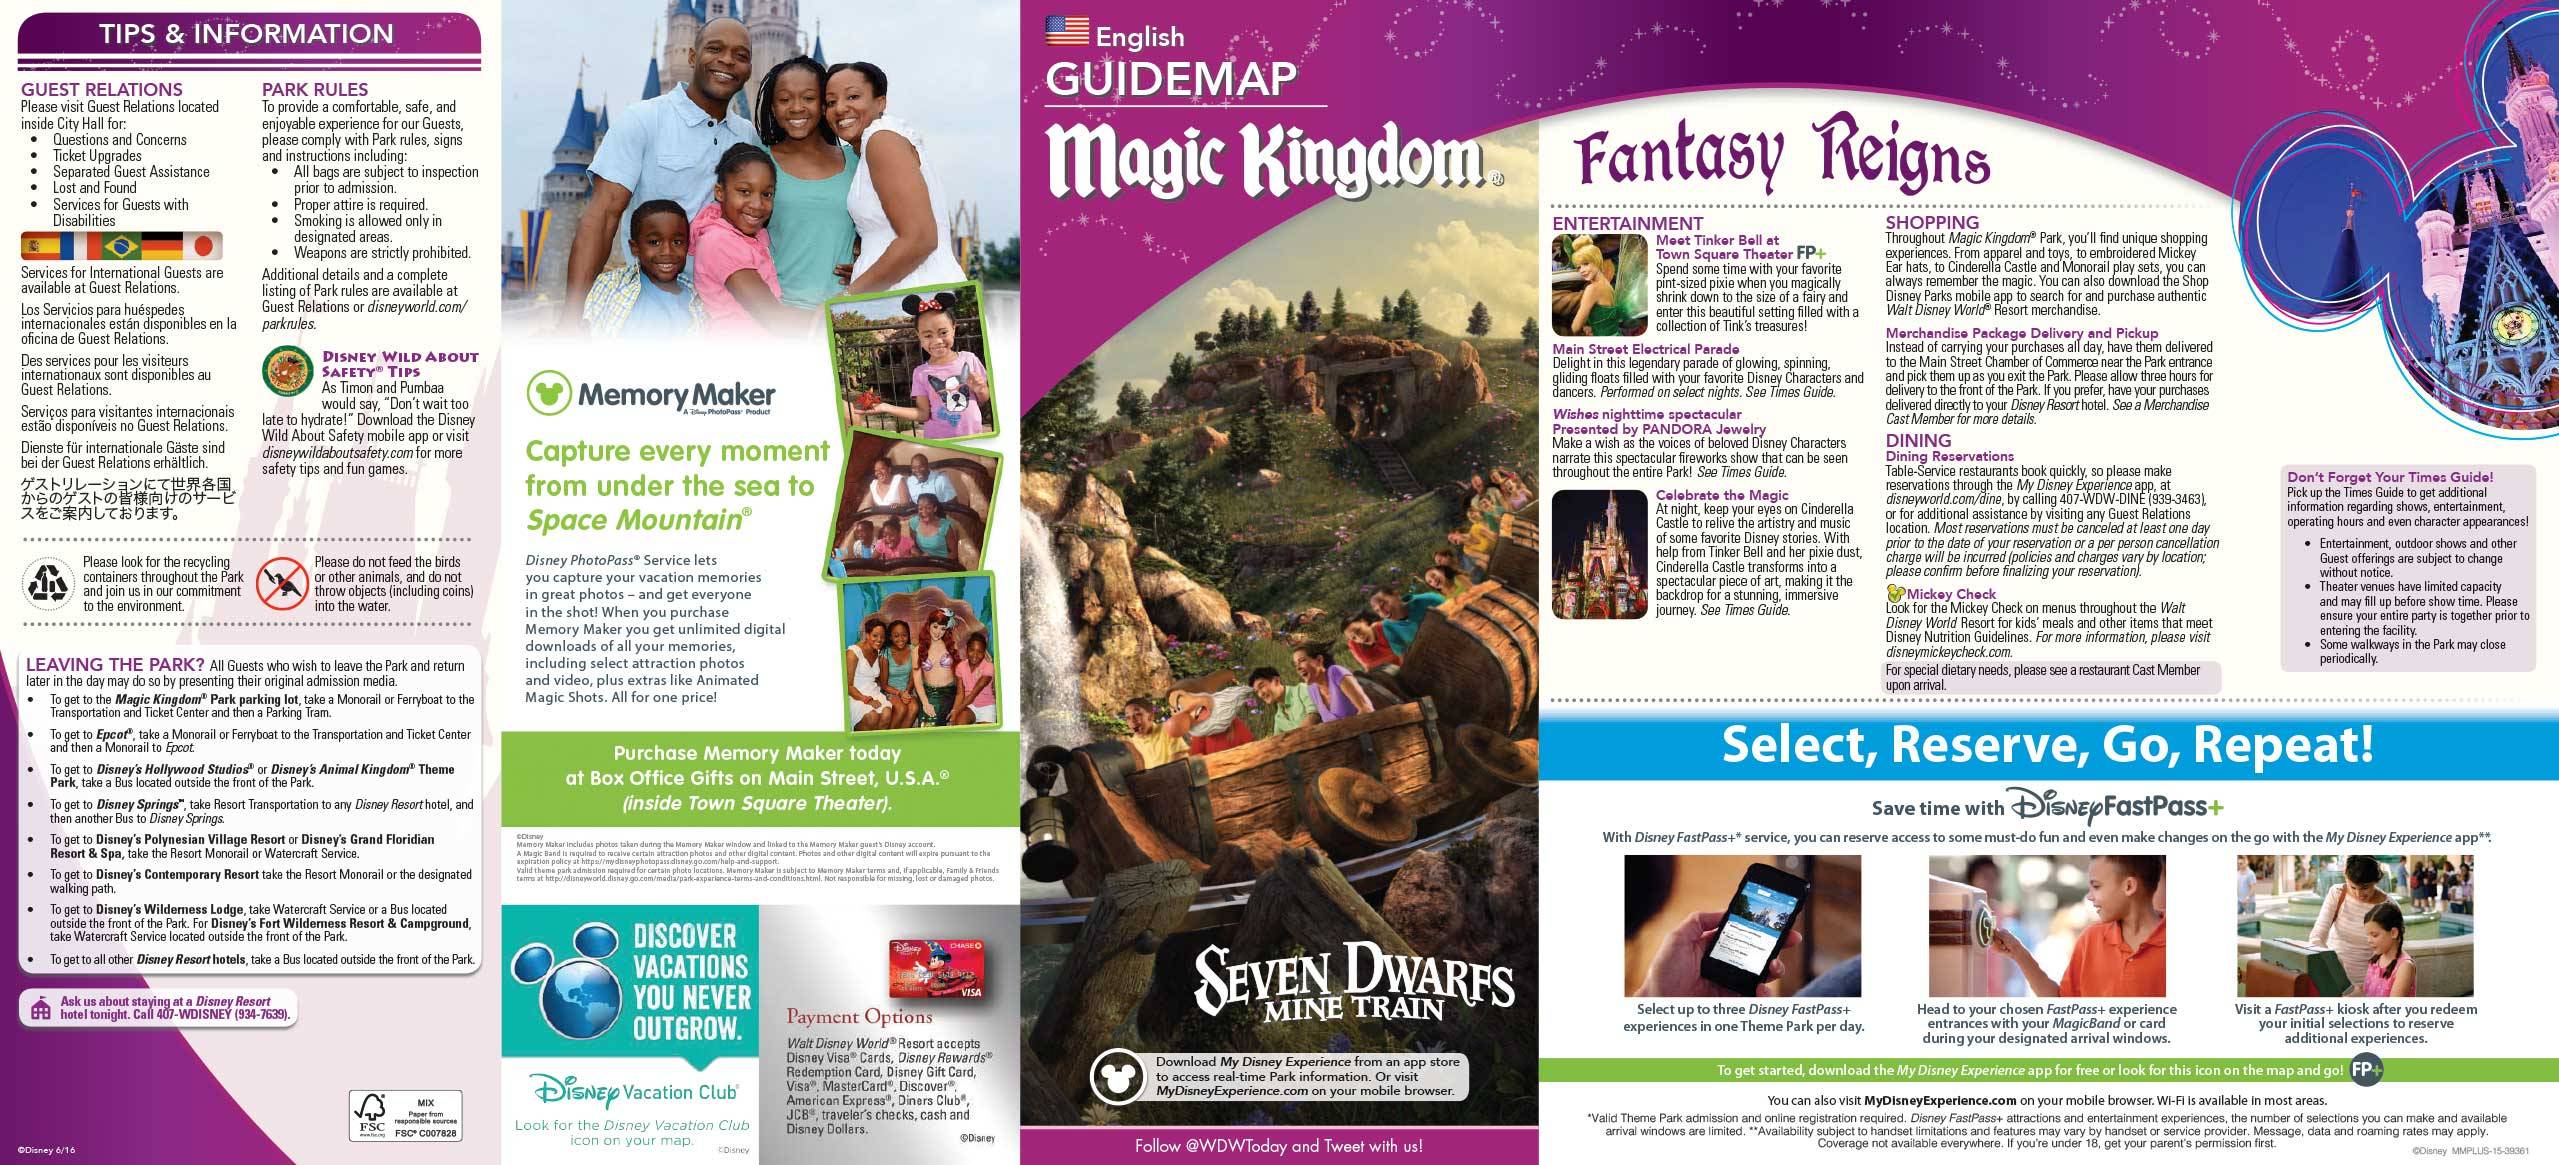 Magic Kingdom guide map June 2016 - Front